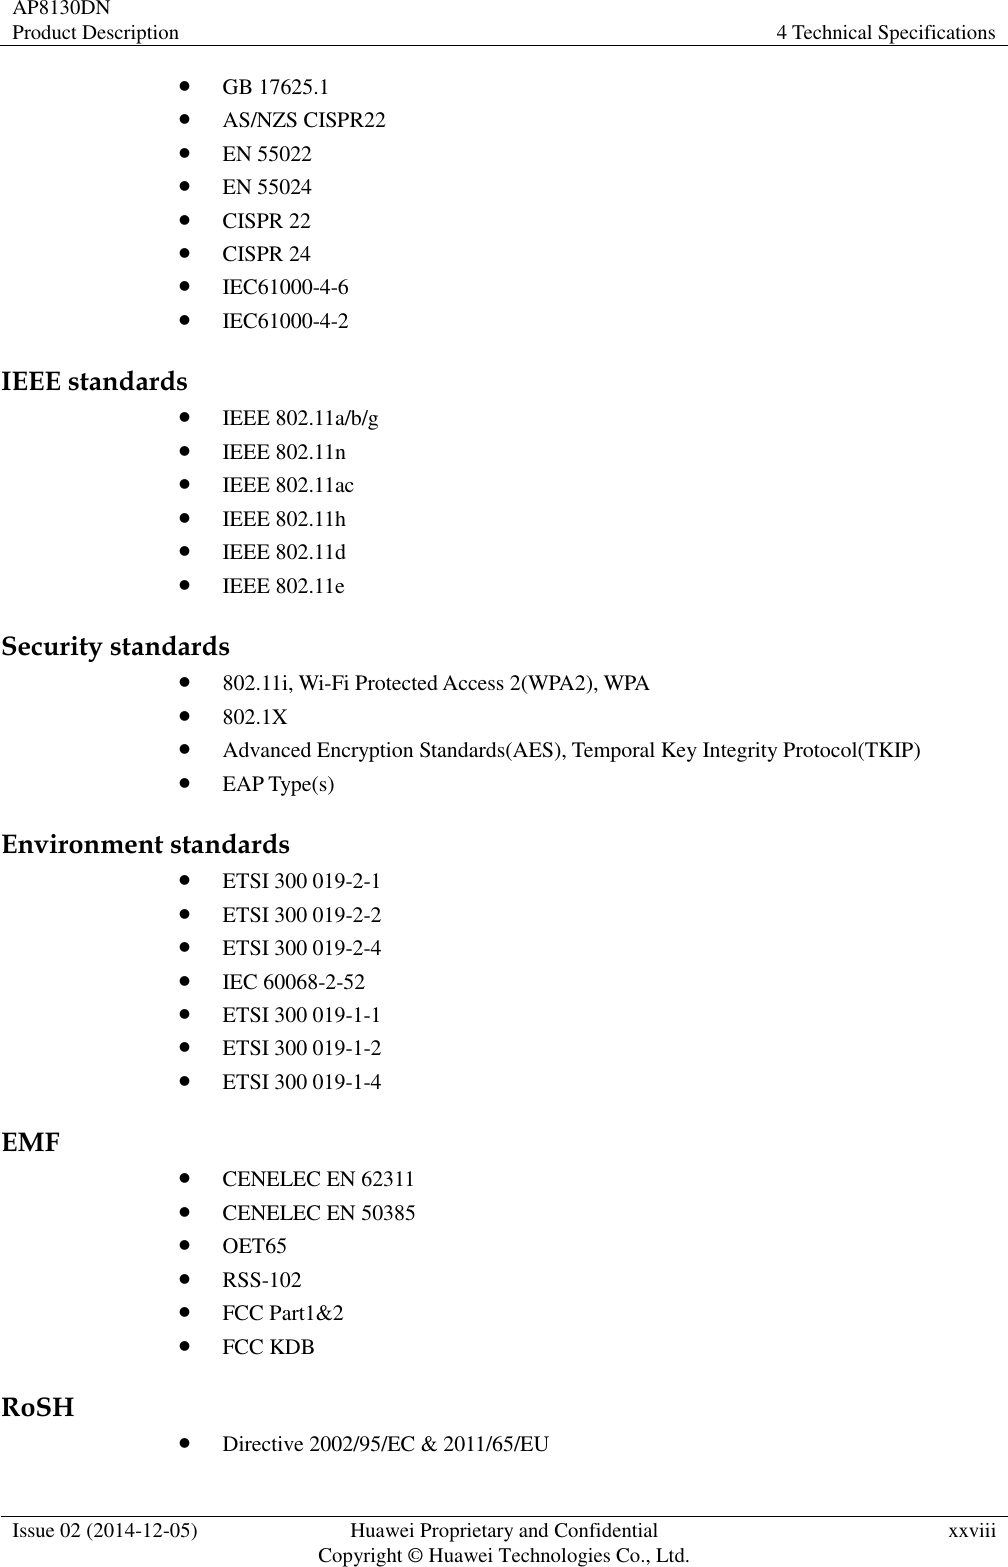 AP8130DN Product Description 4 Technical Specifications  Issue 02 (2014-12-05) Huawei Proprietary and Confidential                                     Copyright © Huawei Technologies Co., Ltd. xxviii   GB 17625.1  AS/NZS CISPR22  EN 55022  EN 55024  CISPR 22  CISPR 24  IEC61000-4-6  IEC61000-4-2 IEEE standards  IEEE 802.11a/b/g  IEEE 802.11n  IEEE 802.11ac  IEEE 802.11h  IEEE 802.11d  IEEE 802.11e Security standards  802.11i, Wi-Fi Protected Access 2(WPA2), WPA  802.1X  Advanced Encryption Standards(AES), Temporal Key Integrity Protocol(TKIP)  EAP Type(s) Environment standards  ETSI 300 019-2-1  ETSI 300 019-2-2  ETSI 300 019-2-4  IEC 60068-2-52  ETSI 300 019-1-1  ETSI 300 019-1-2  ETSI 300 019-1-4 EMF  CENELEC EN 62311  CENELEC EN 50385  OET65  RSS-102  FCC Part1&amp;2  FCC KDB RoSH  Directive 2002/95/EC &amp; 2011/65/EU 